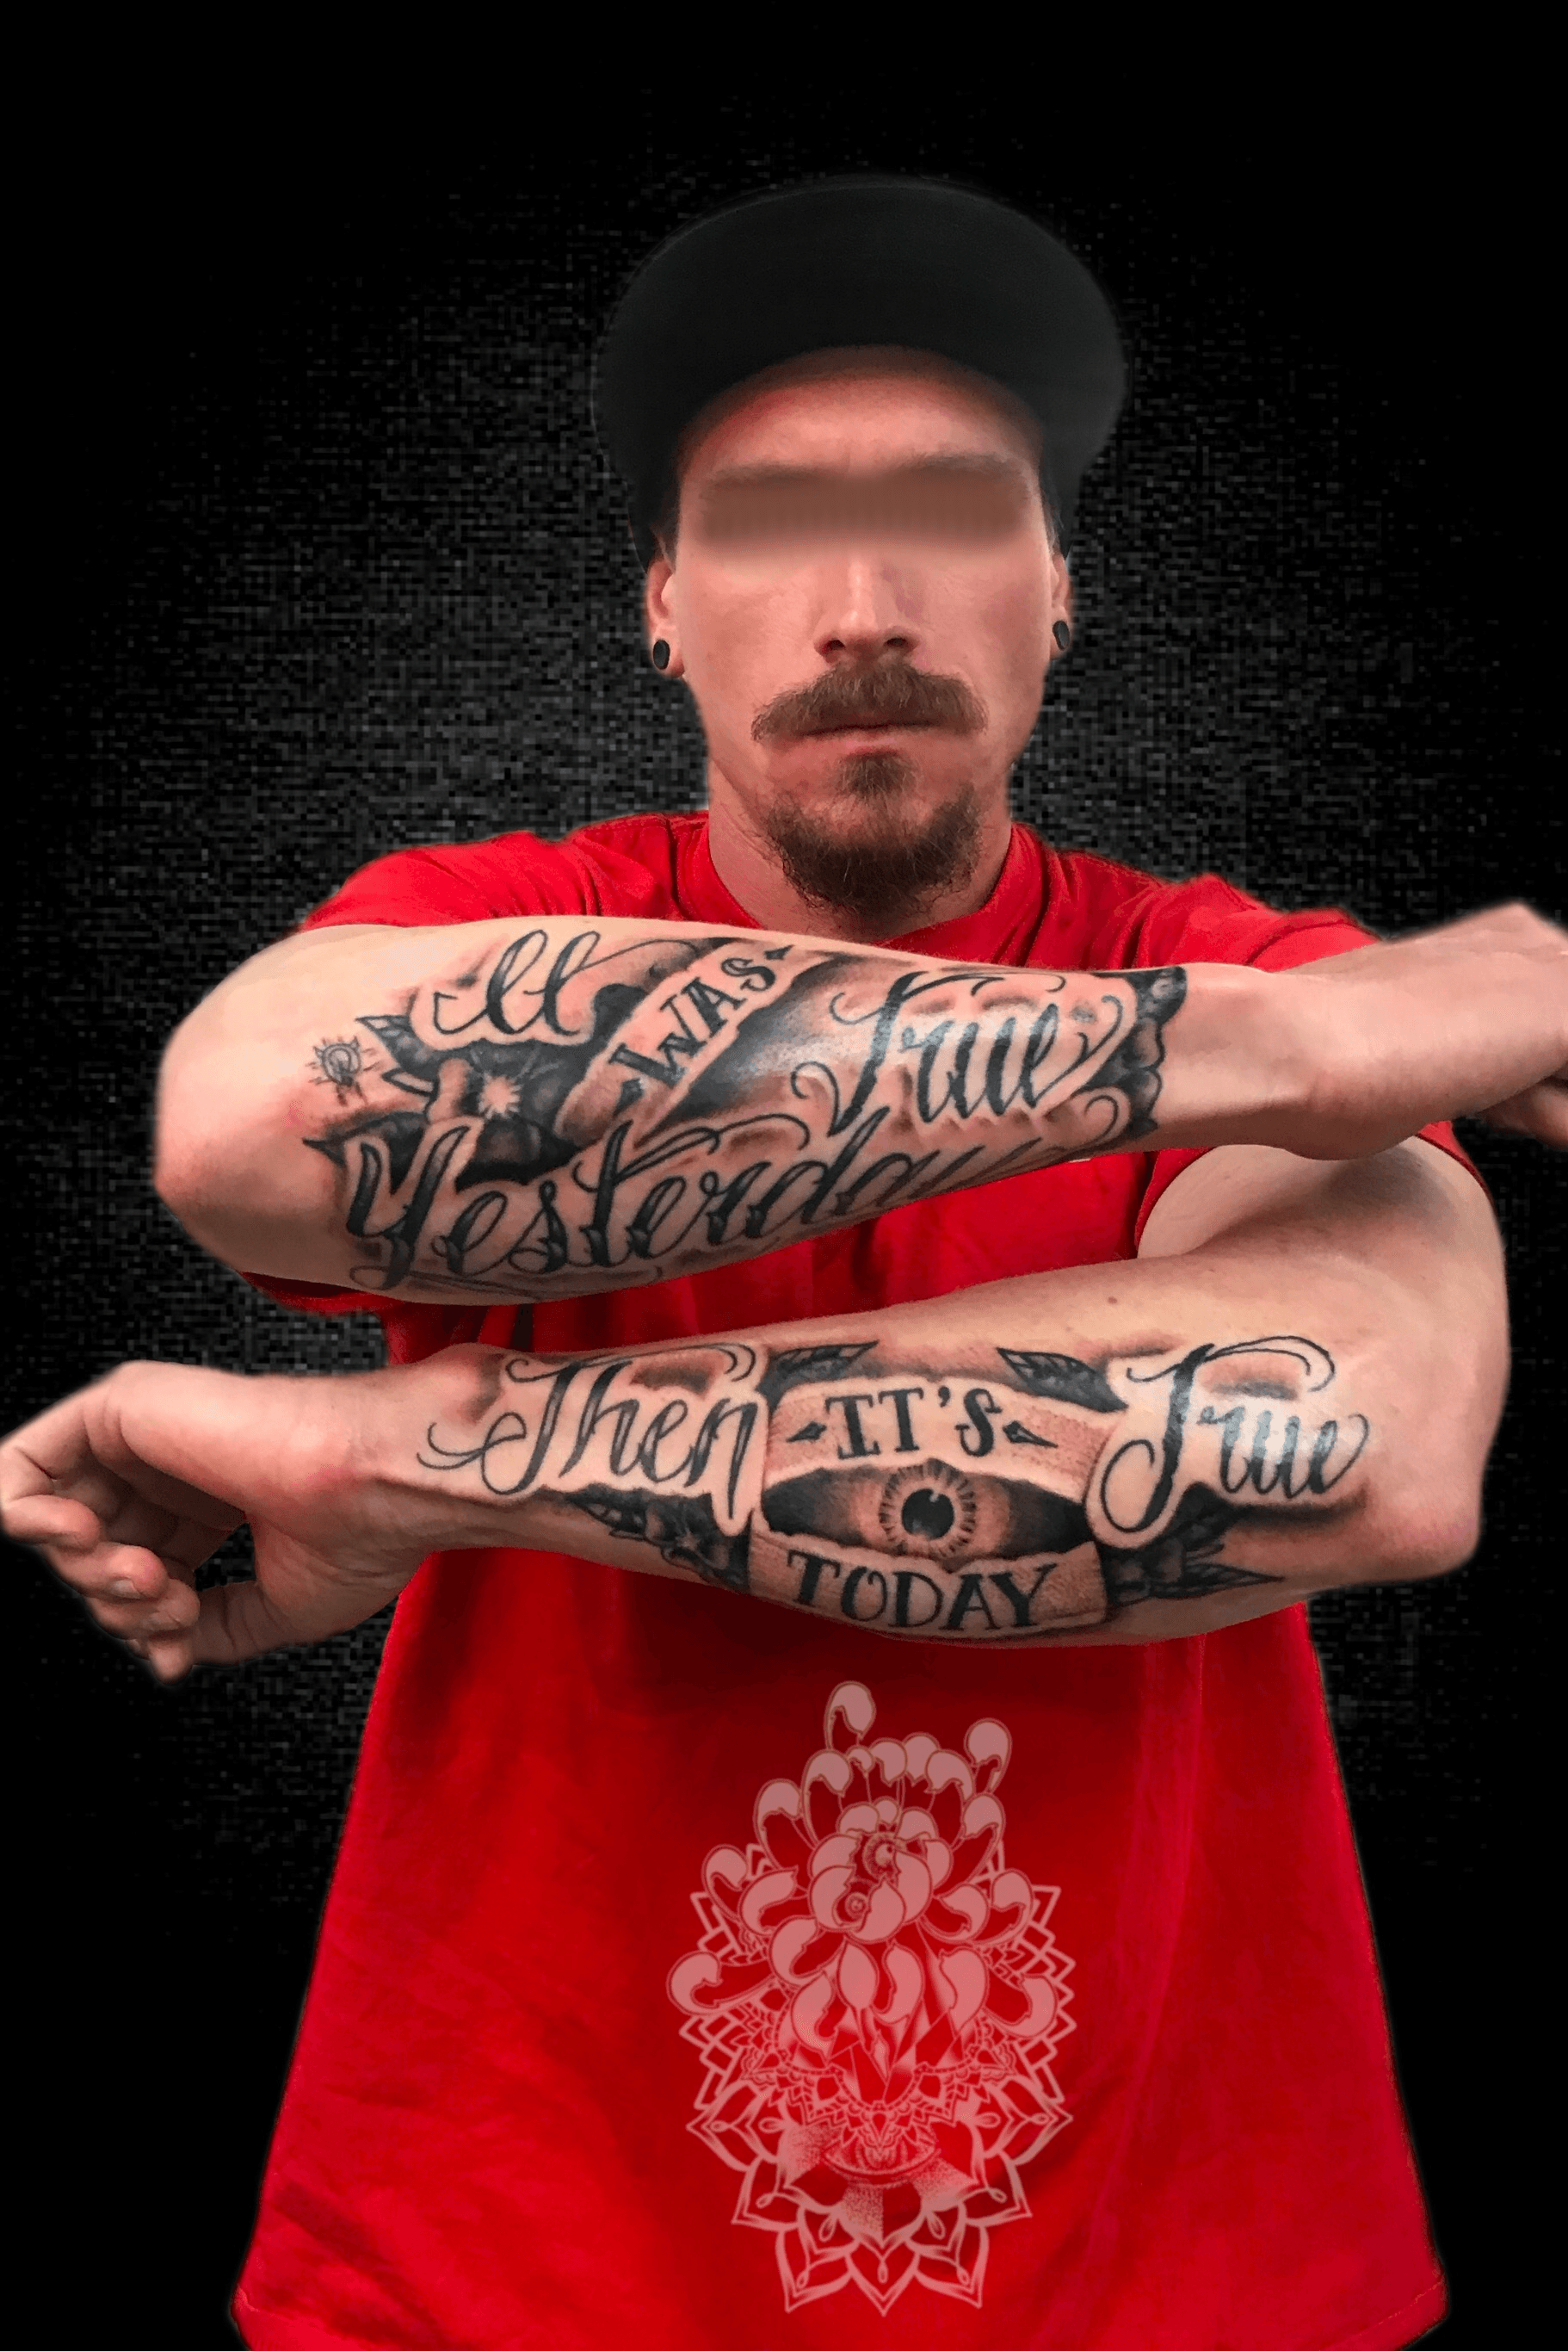 BlindSide Tattoo Studio Paul Wall has Expensive Taste at Blind Side Tattoo  Studio